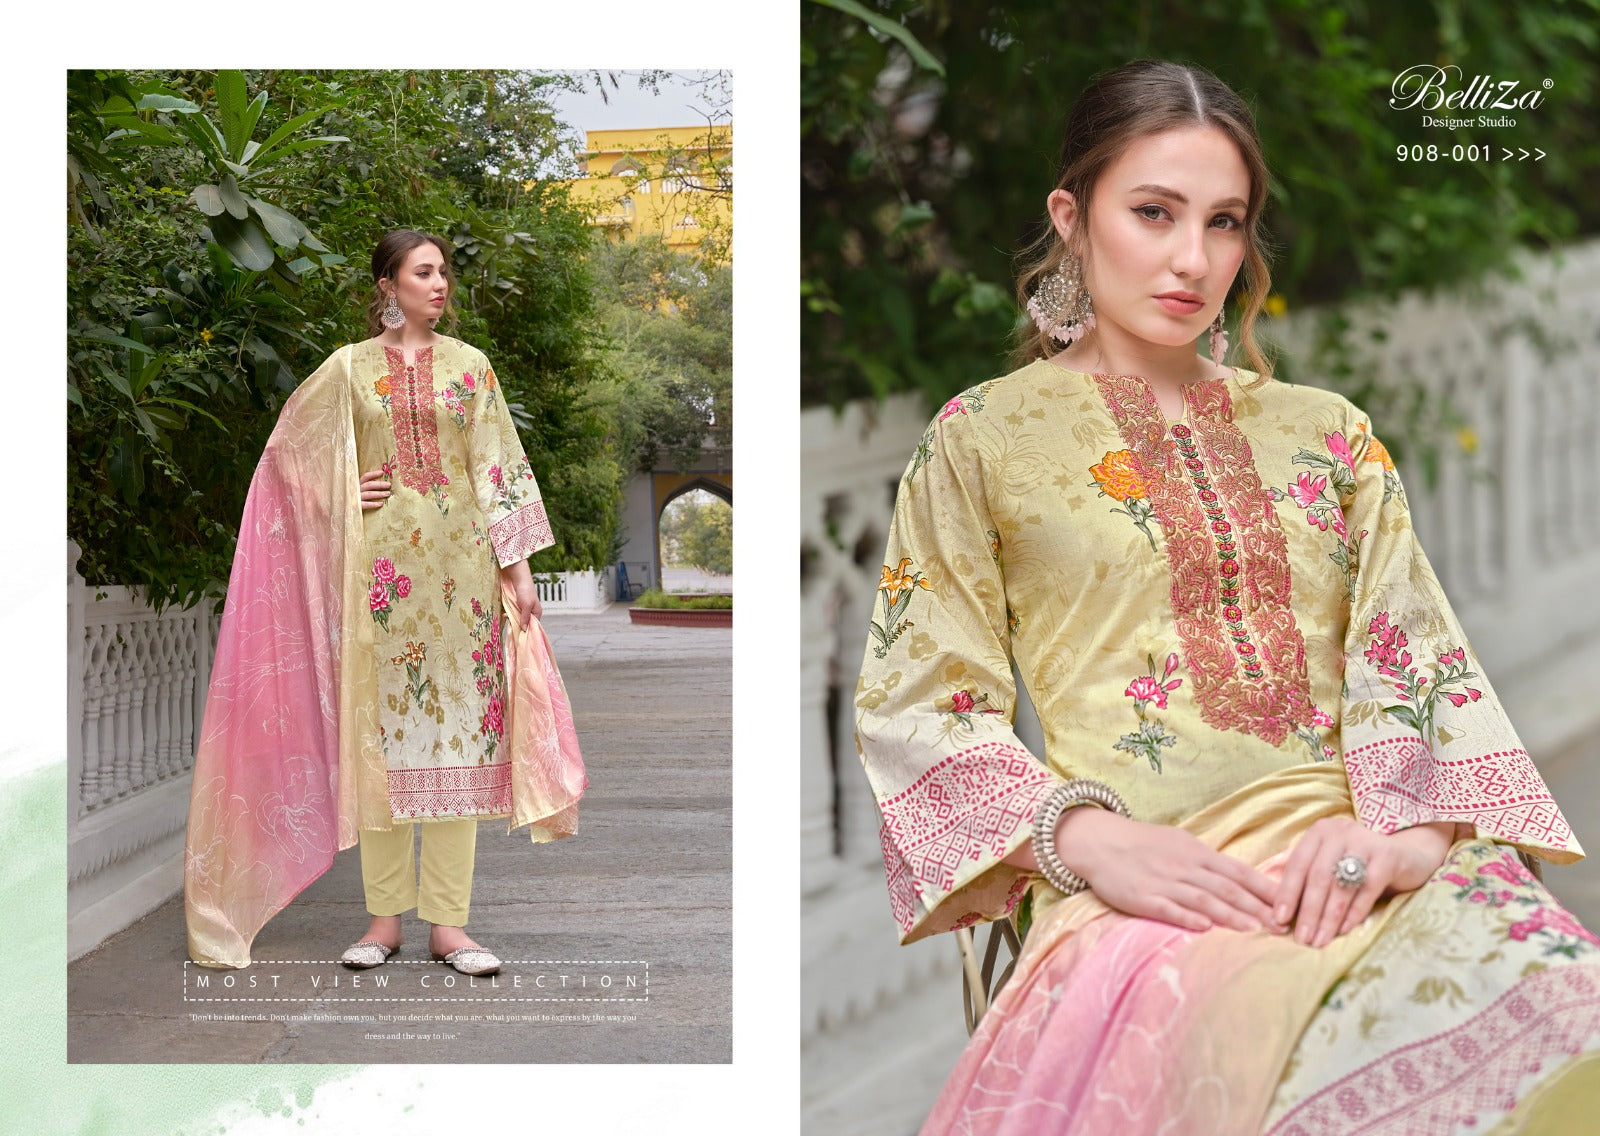 Naira Vol 48 Belliza Designer Studio Pure Cotton Karachi Salwar Suits